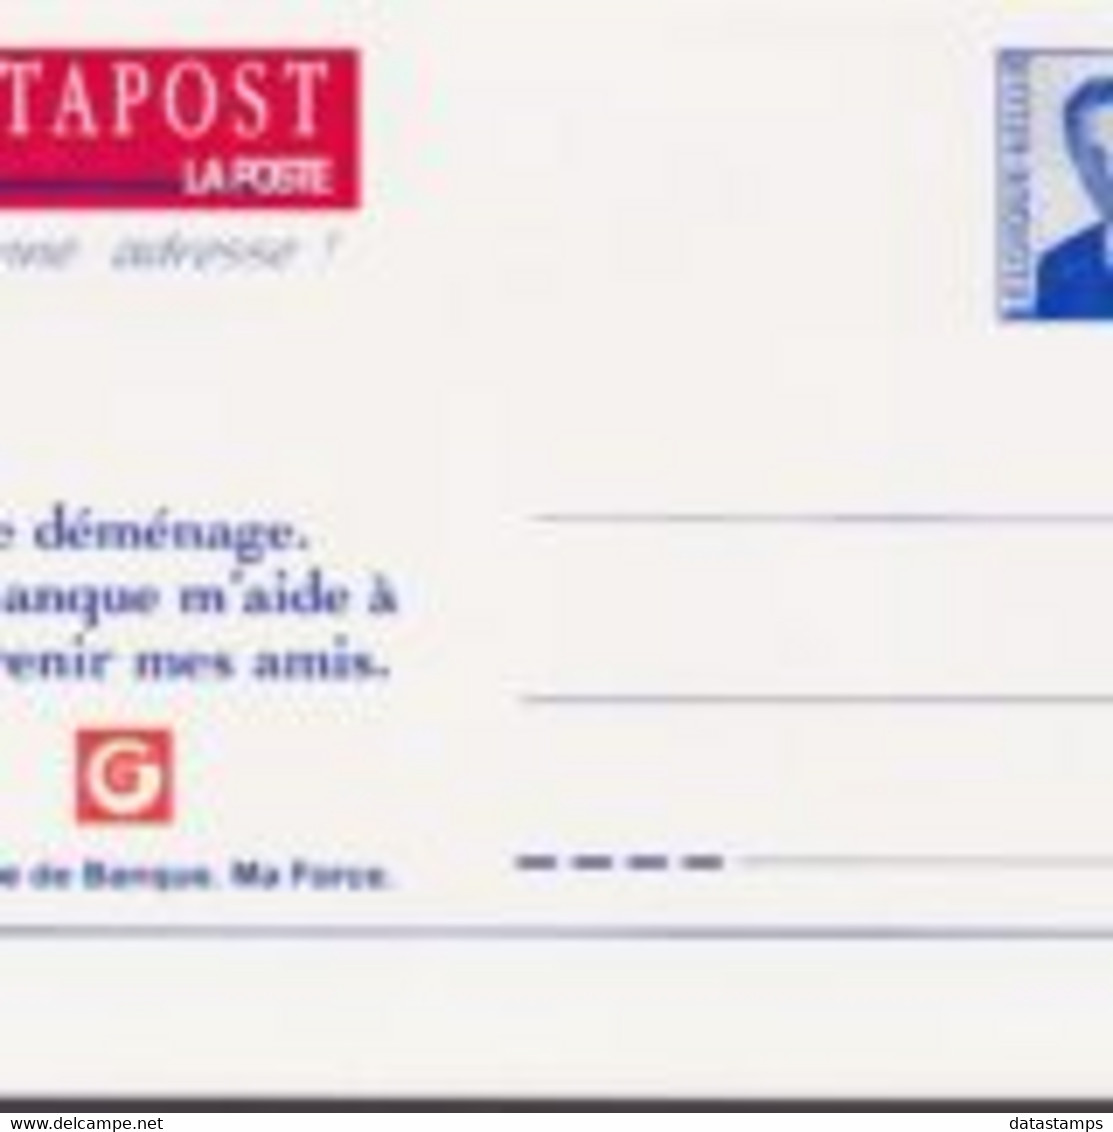 België 1996 - Postcard - XX - Address Change Mutapost / General Bank - Avis Changement Adresse